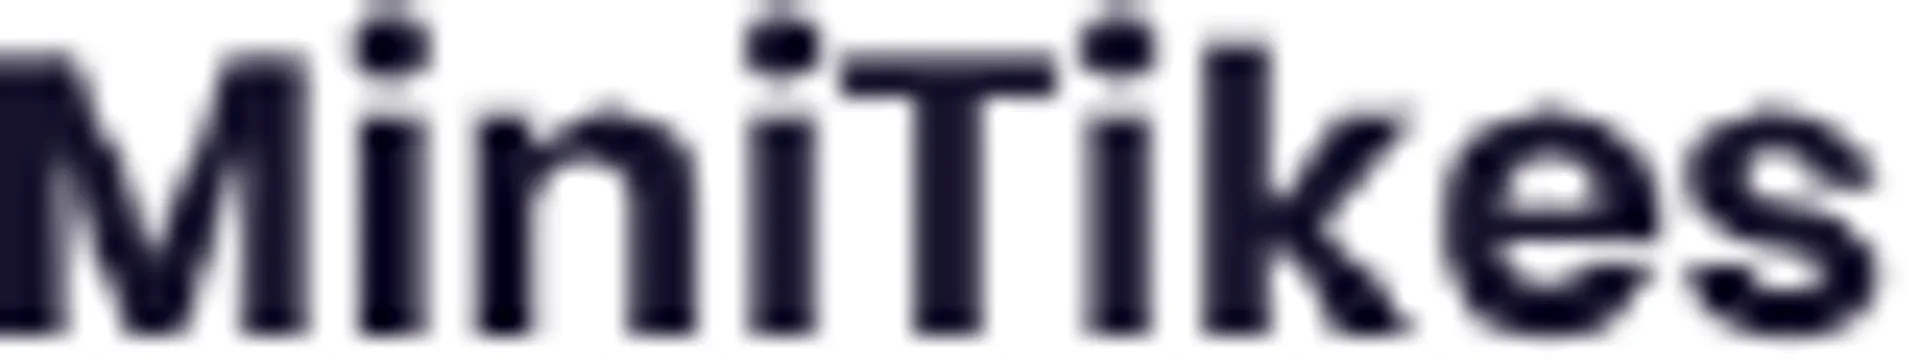 MINI TIKES logo current weekly ad